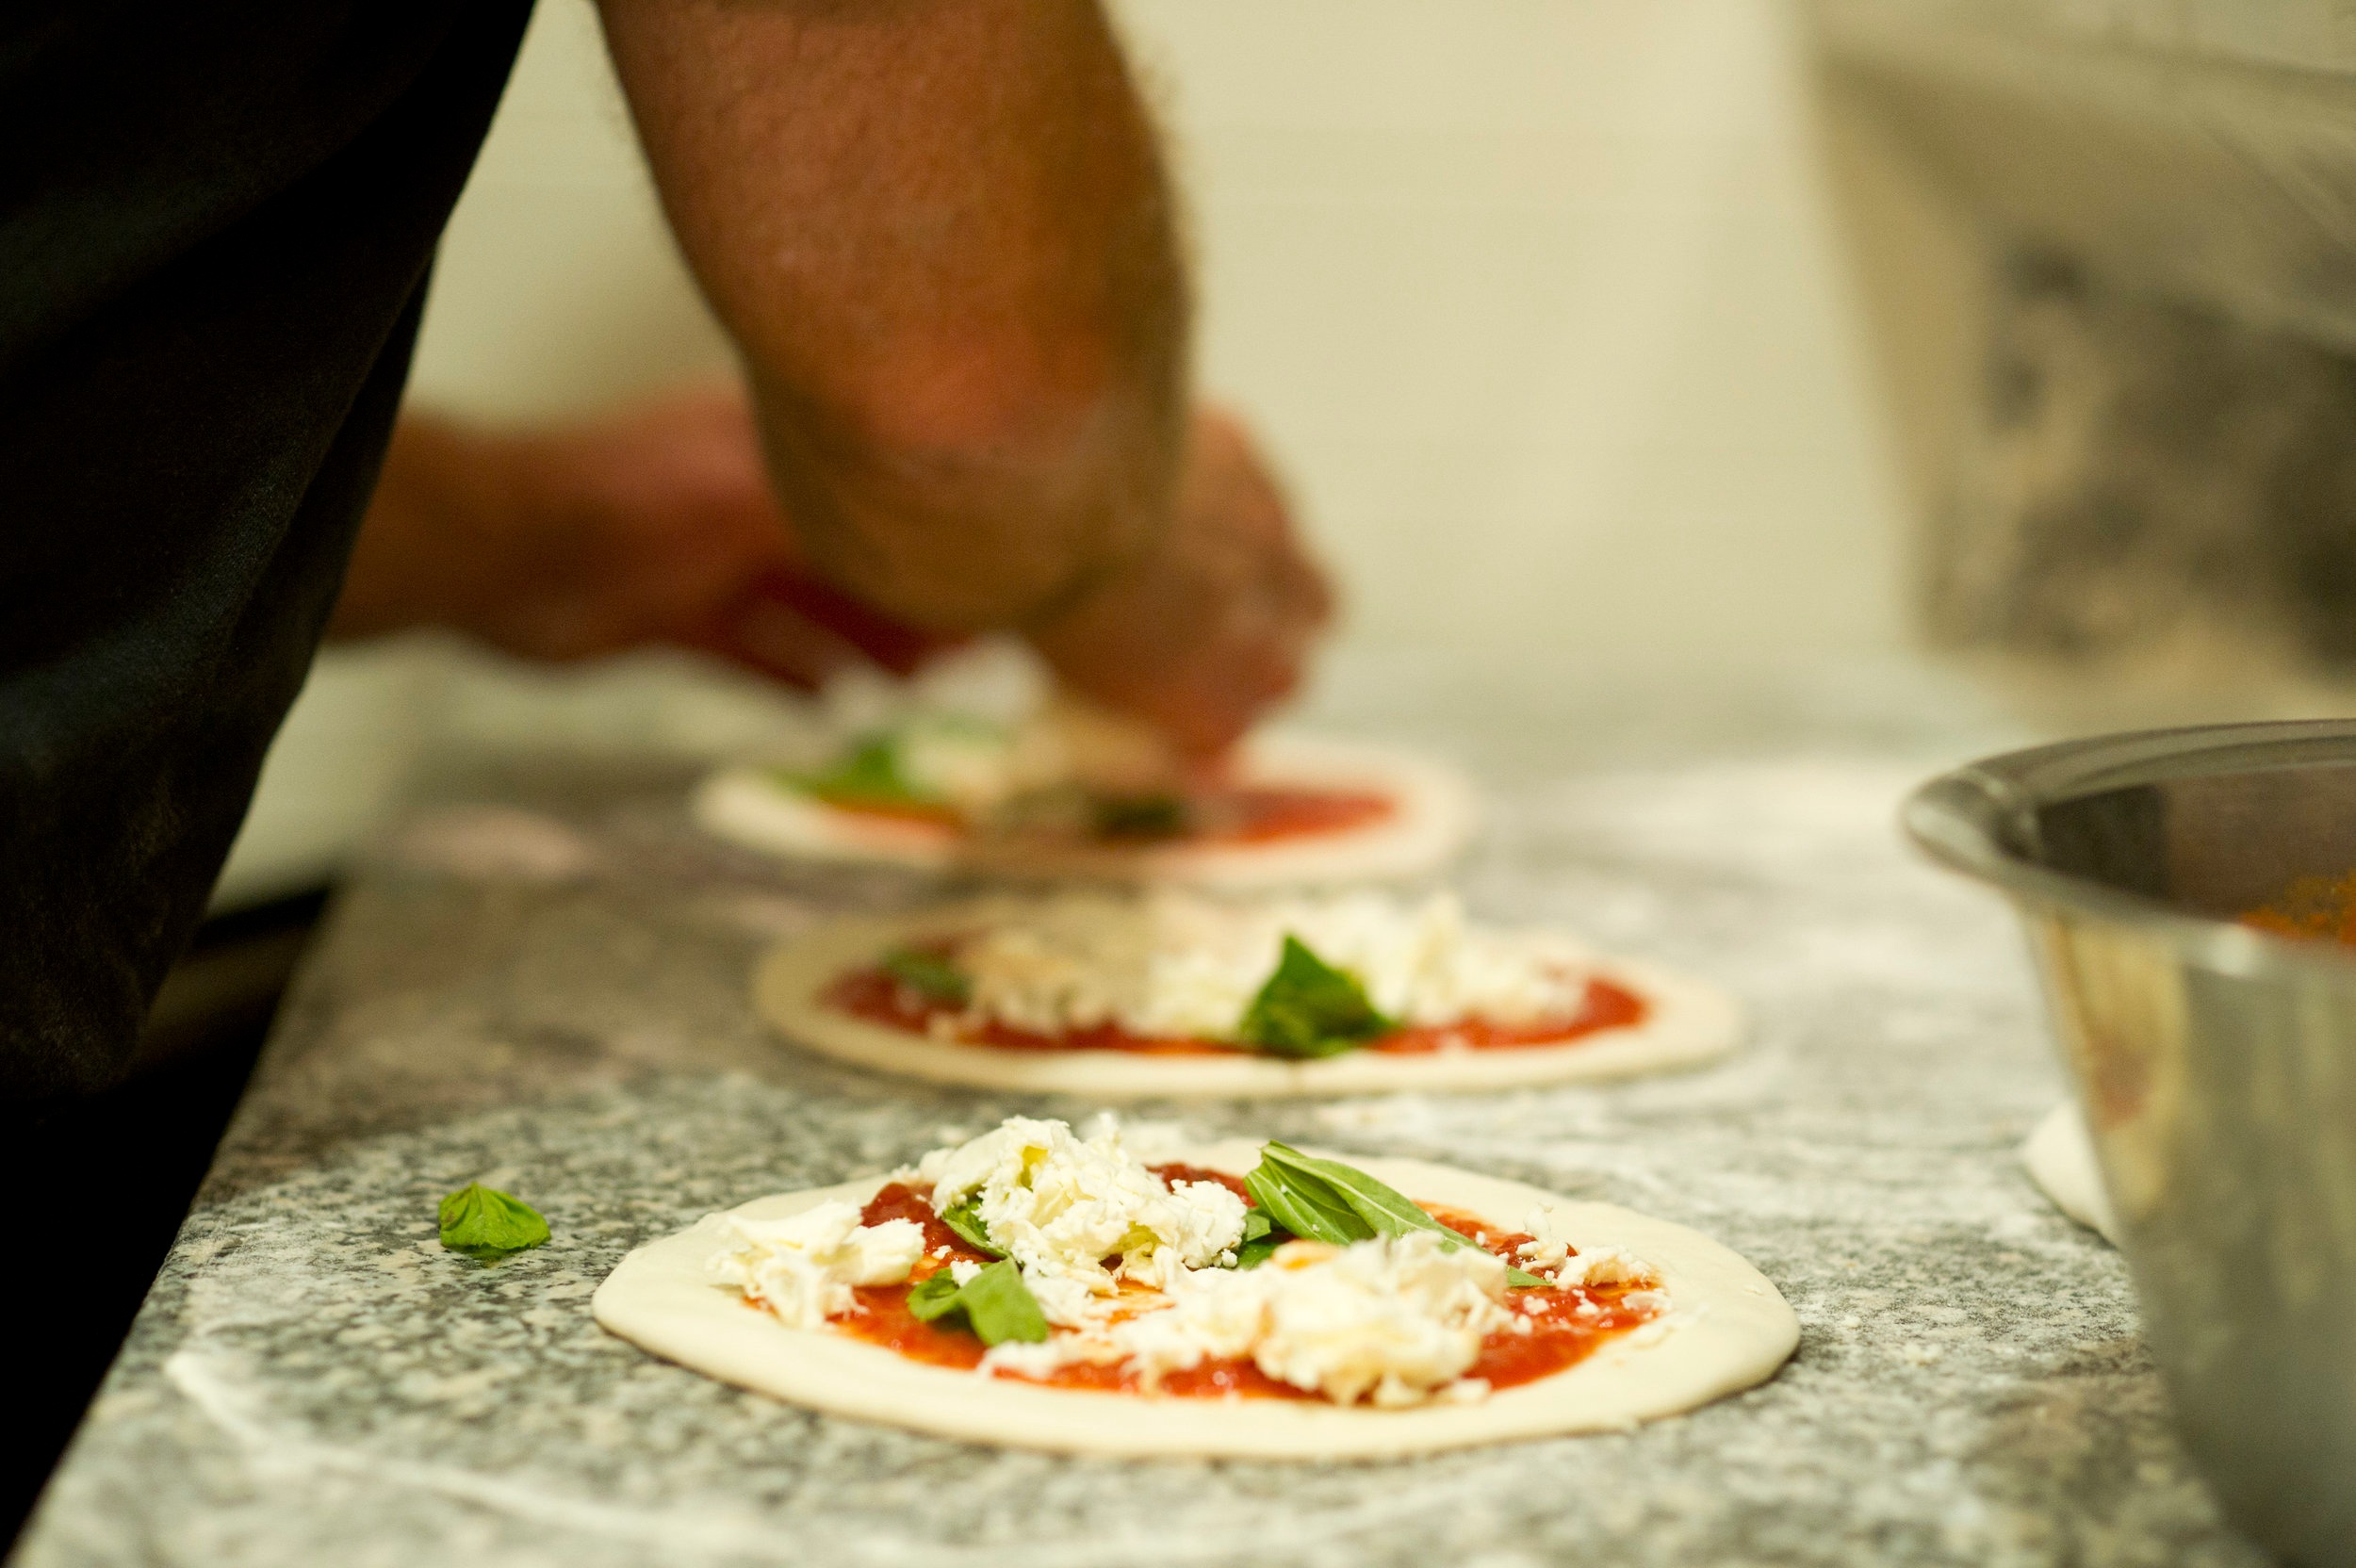 Authentic Neapolitan Pizza